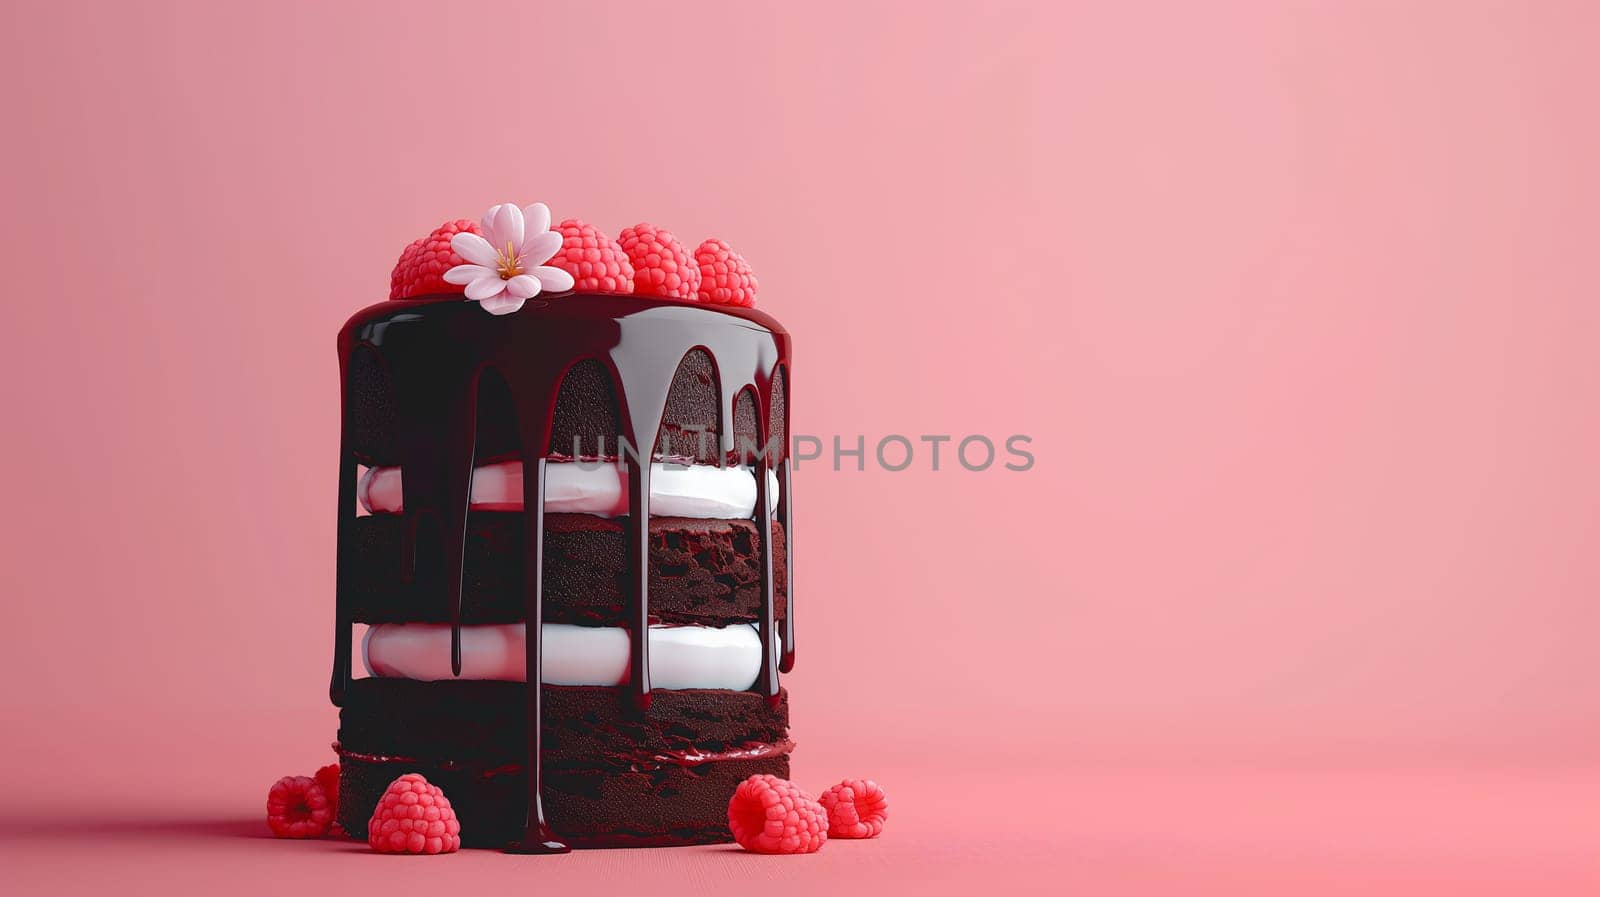 Elegant Chocolate Layer Cake With Raspberry Garnish on Pink Background by chrisroll